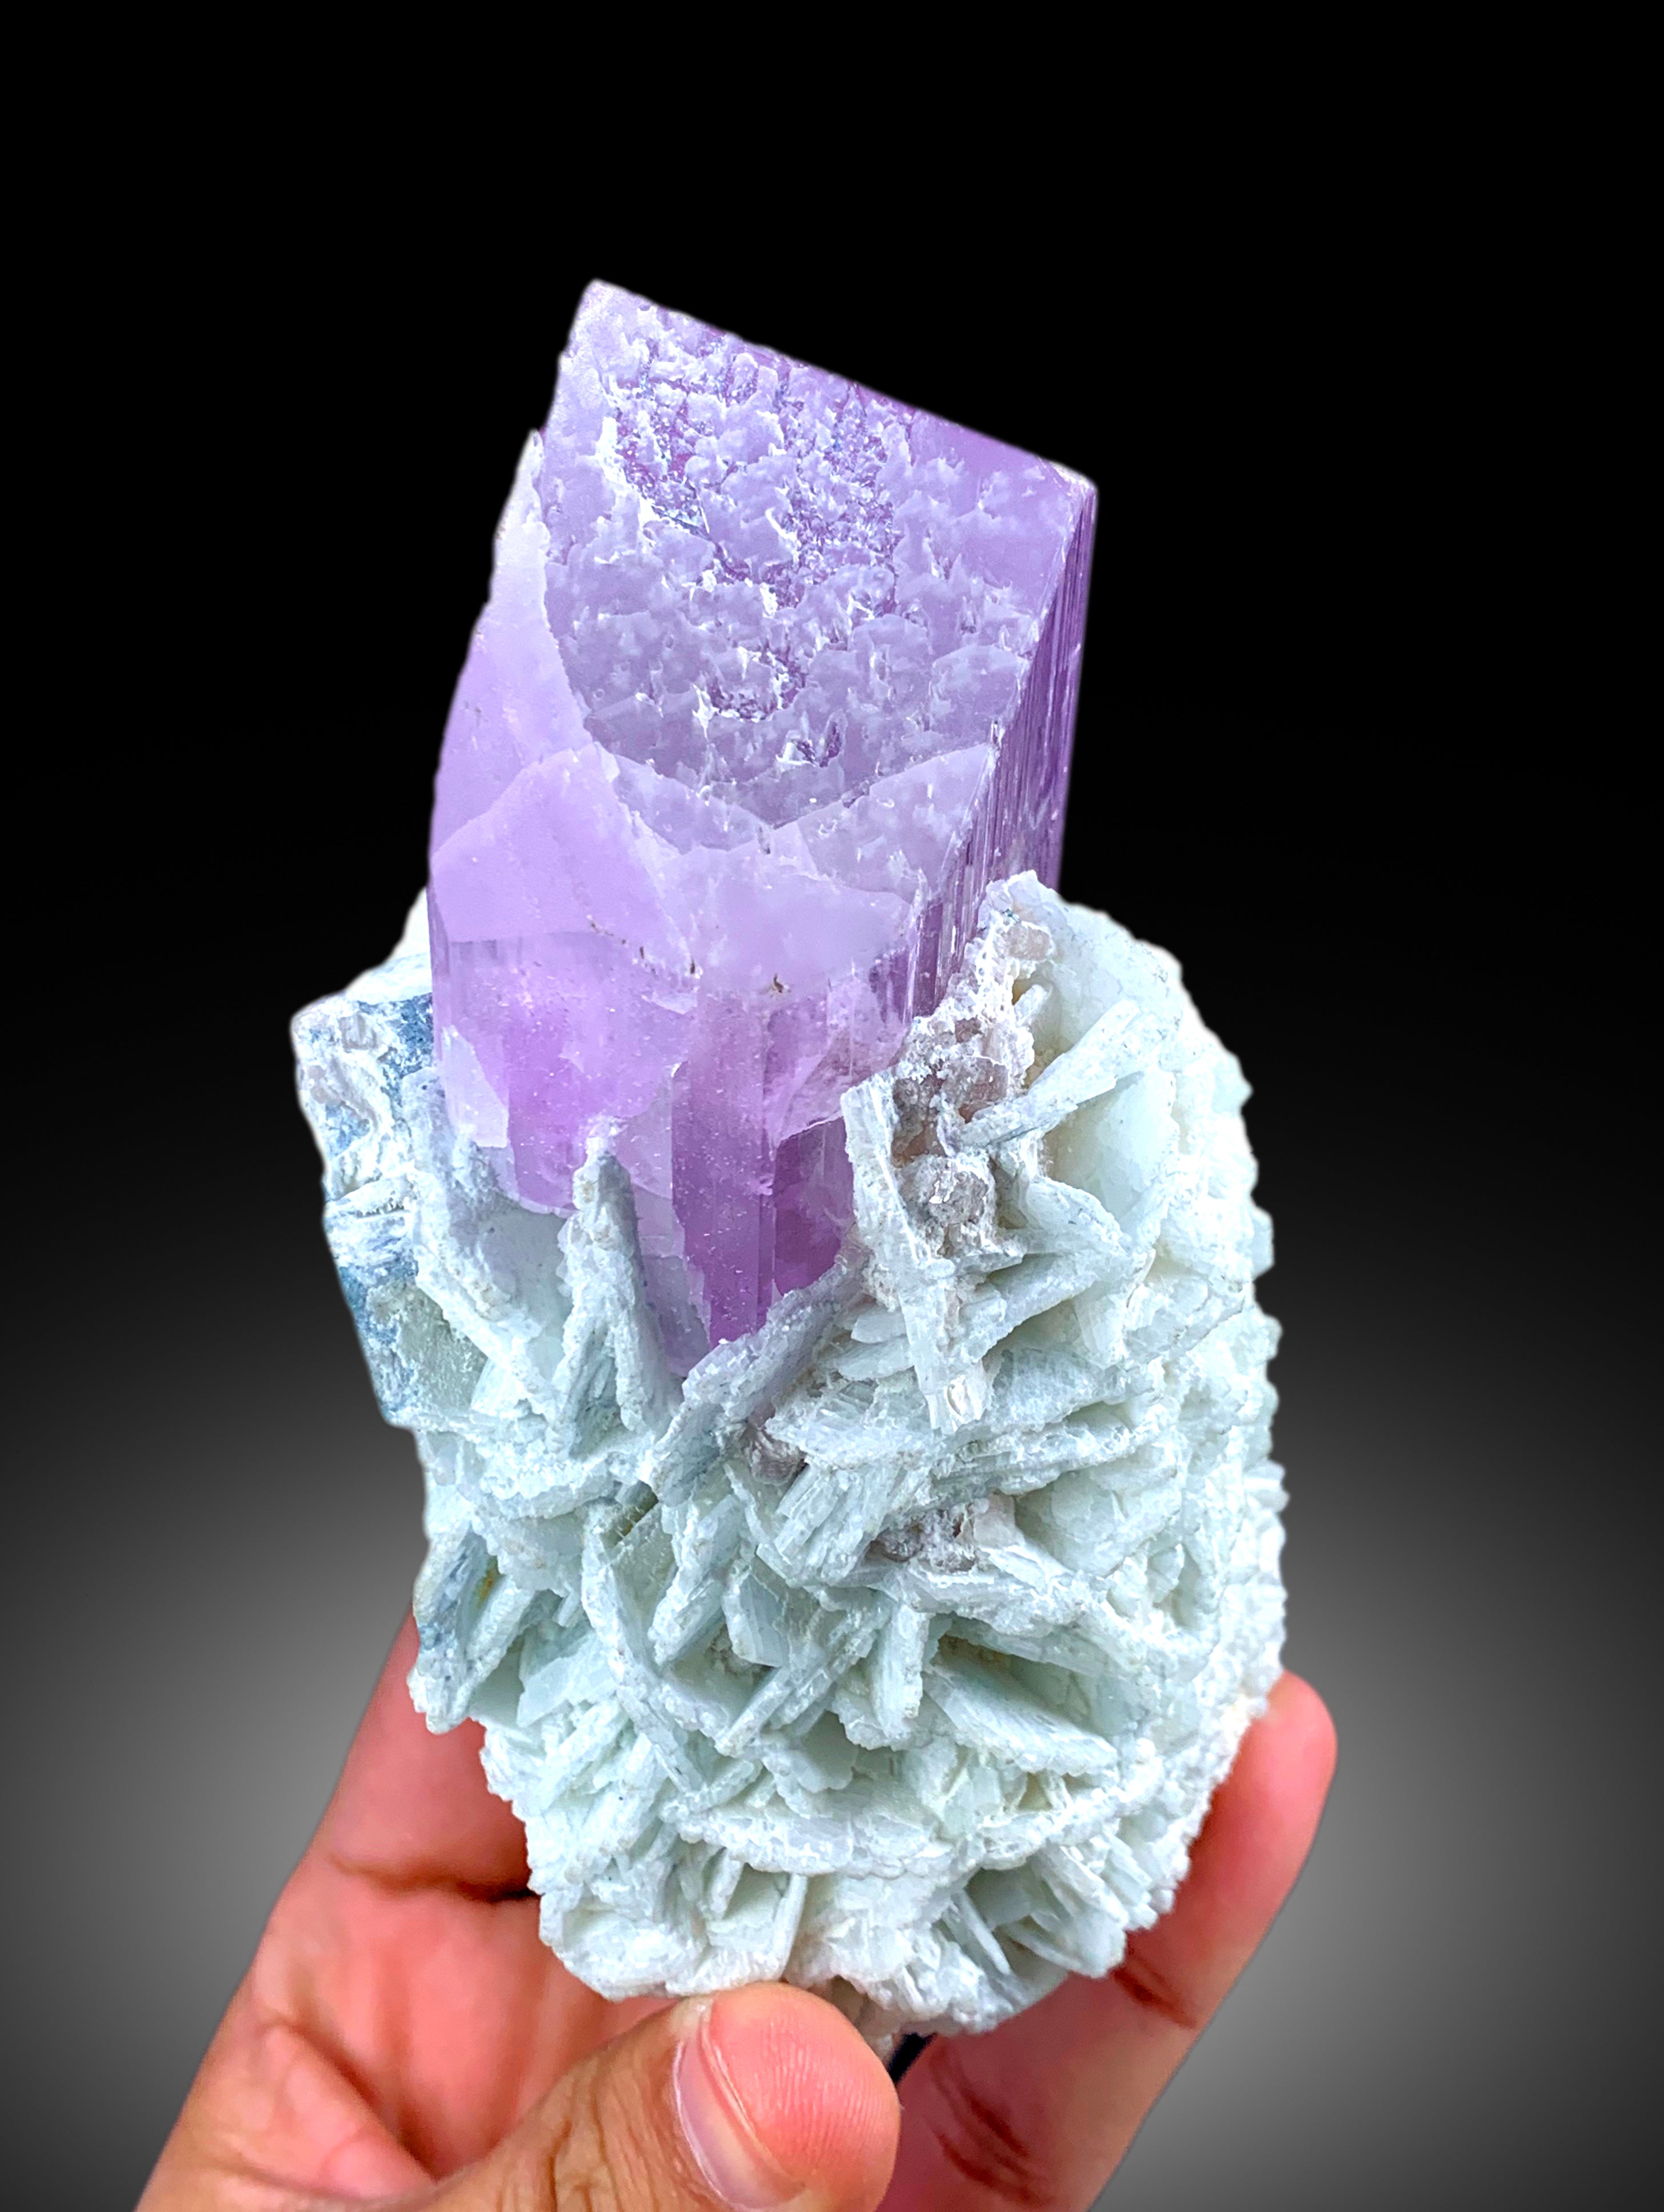 Exquisite Natural Pink Kunzite Crystal with Cleavelandite, Kunzite Specimen, Raw Mineral, Kunzite from Afghanistan - 694 gram